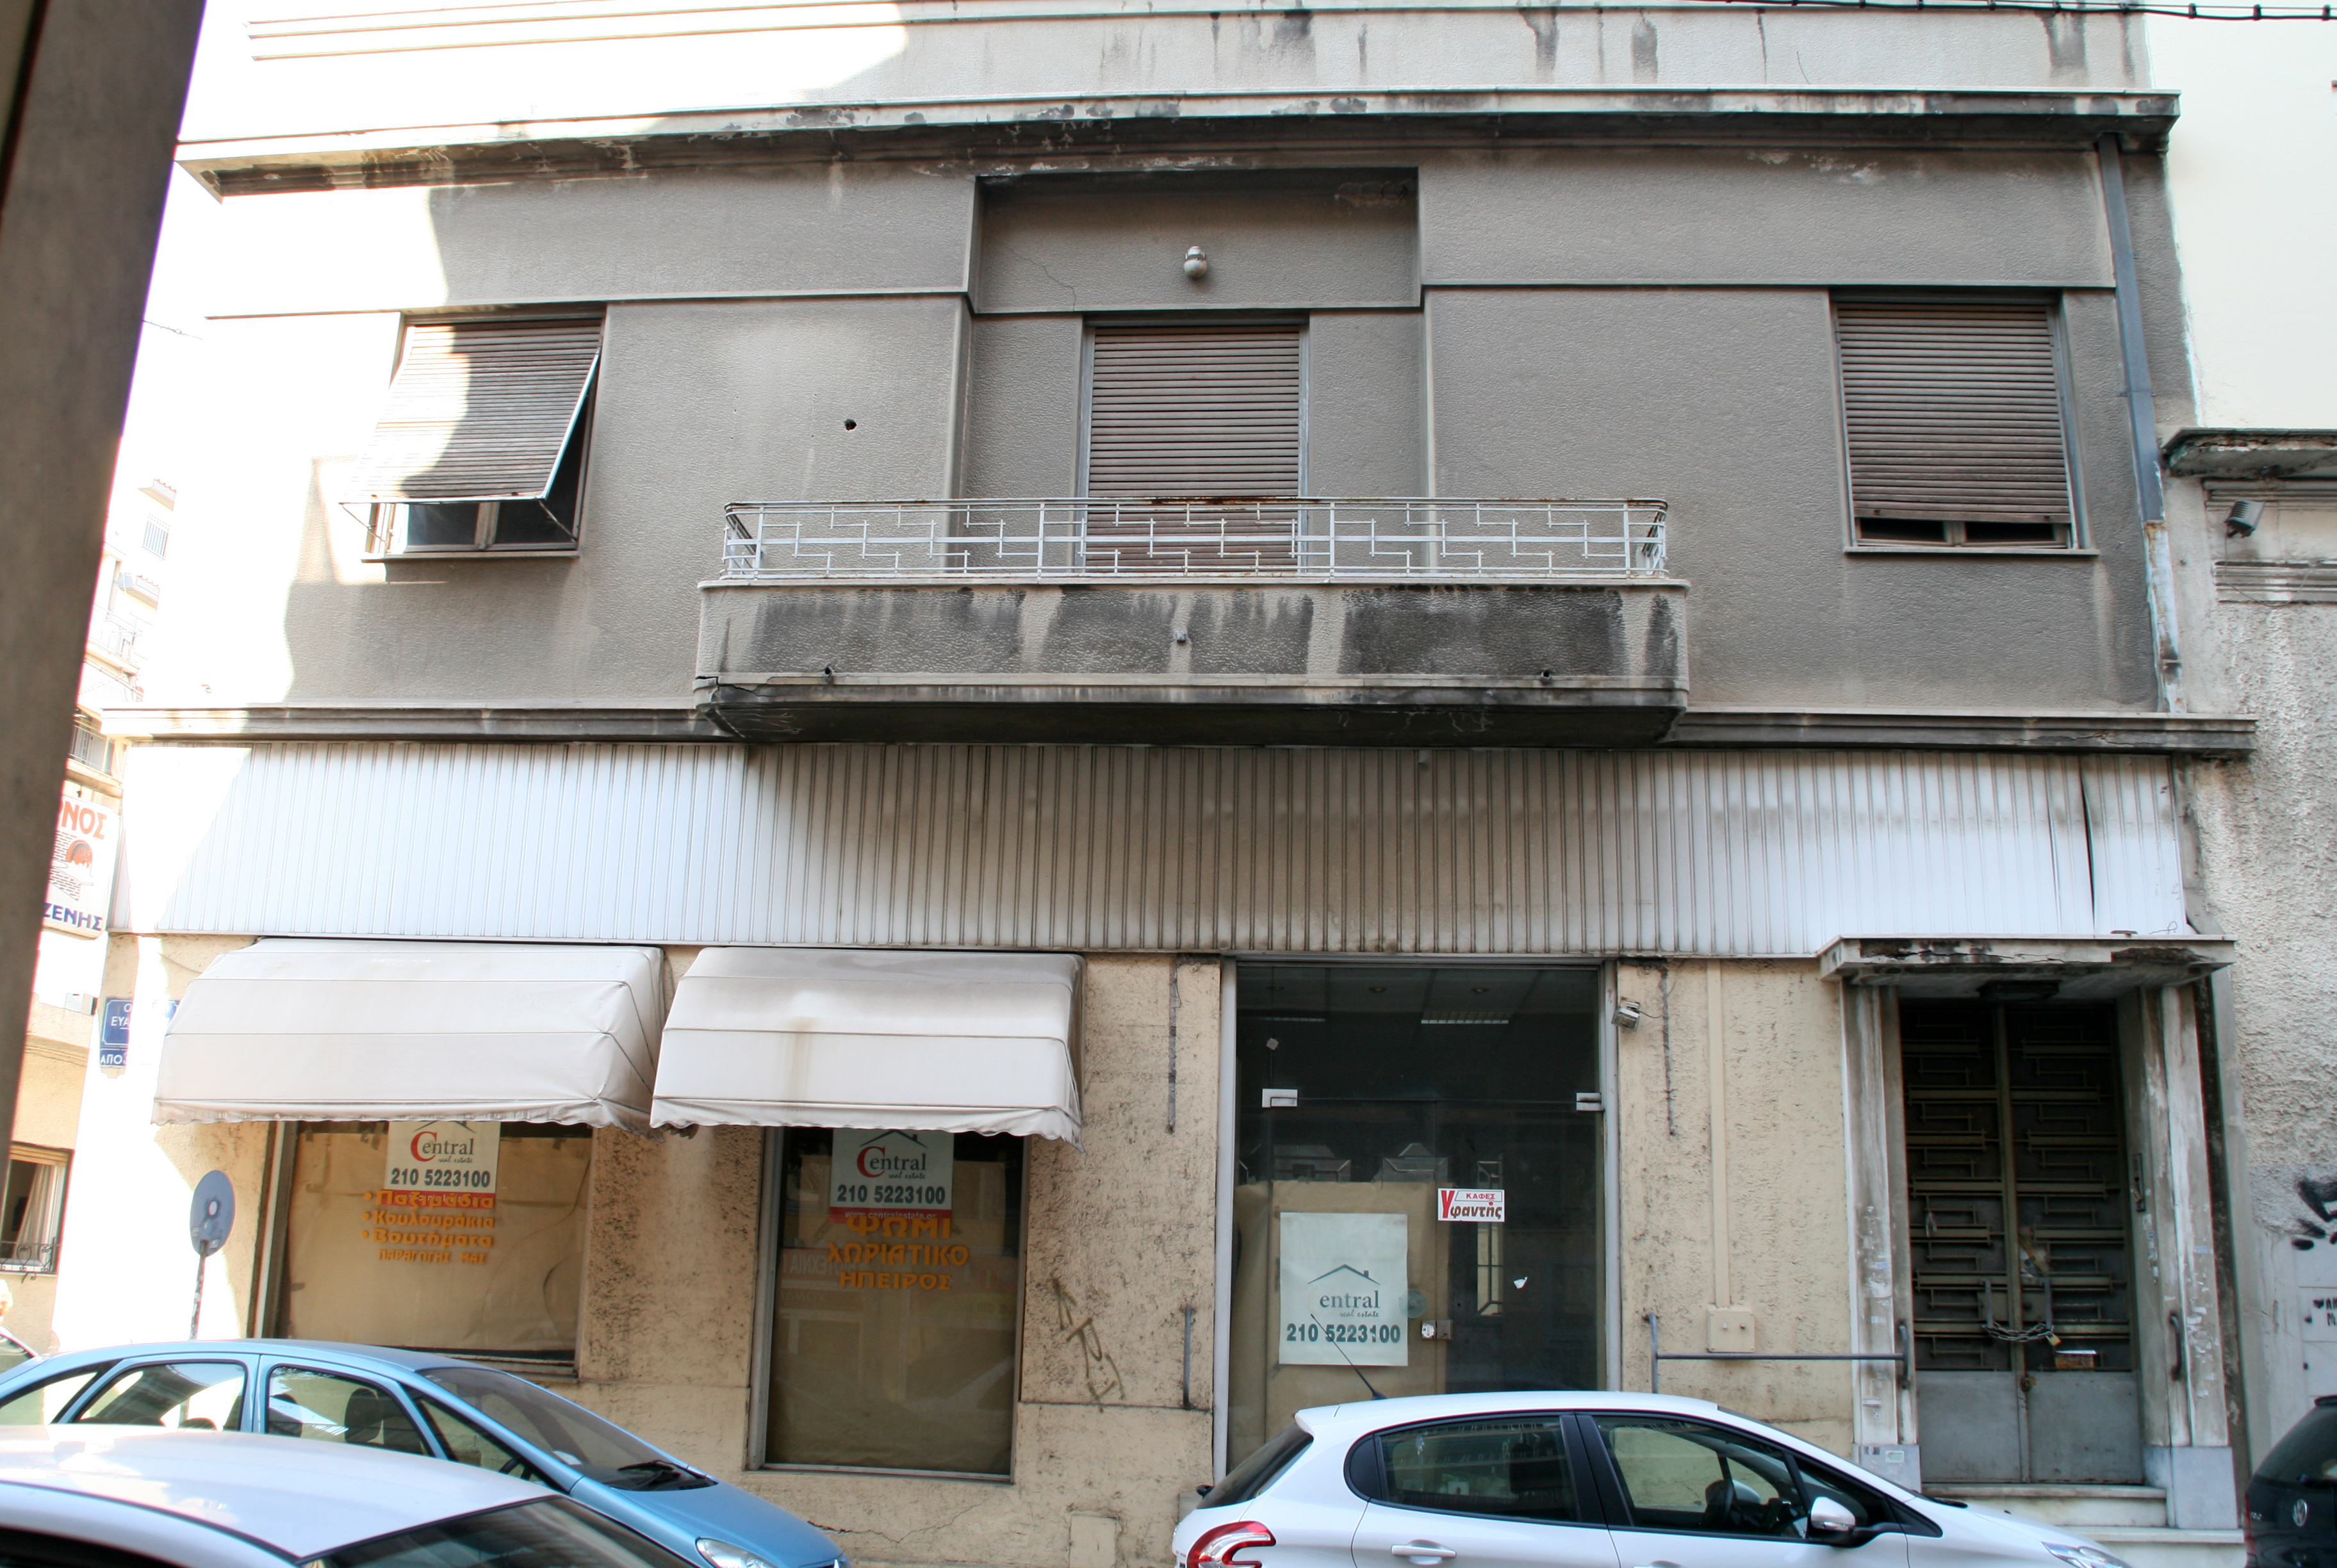 View of the façade on Evalkidou street